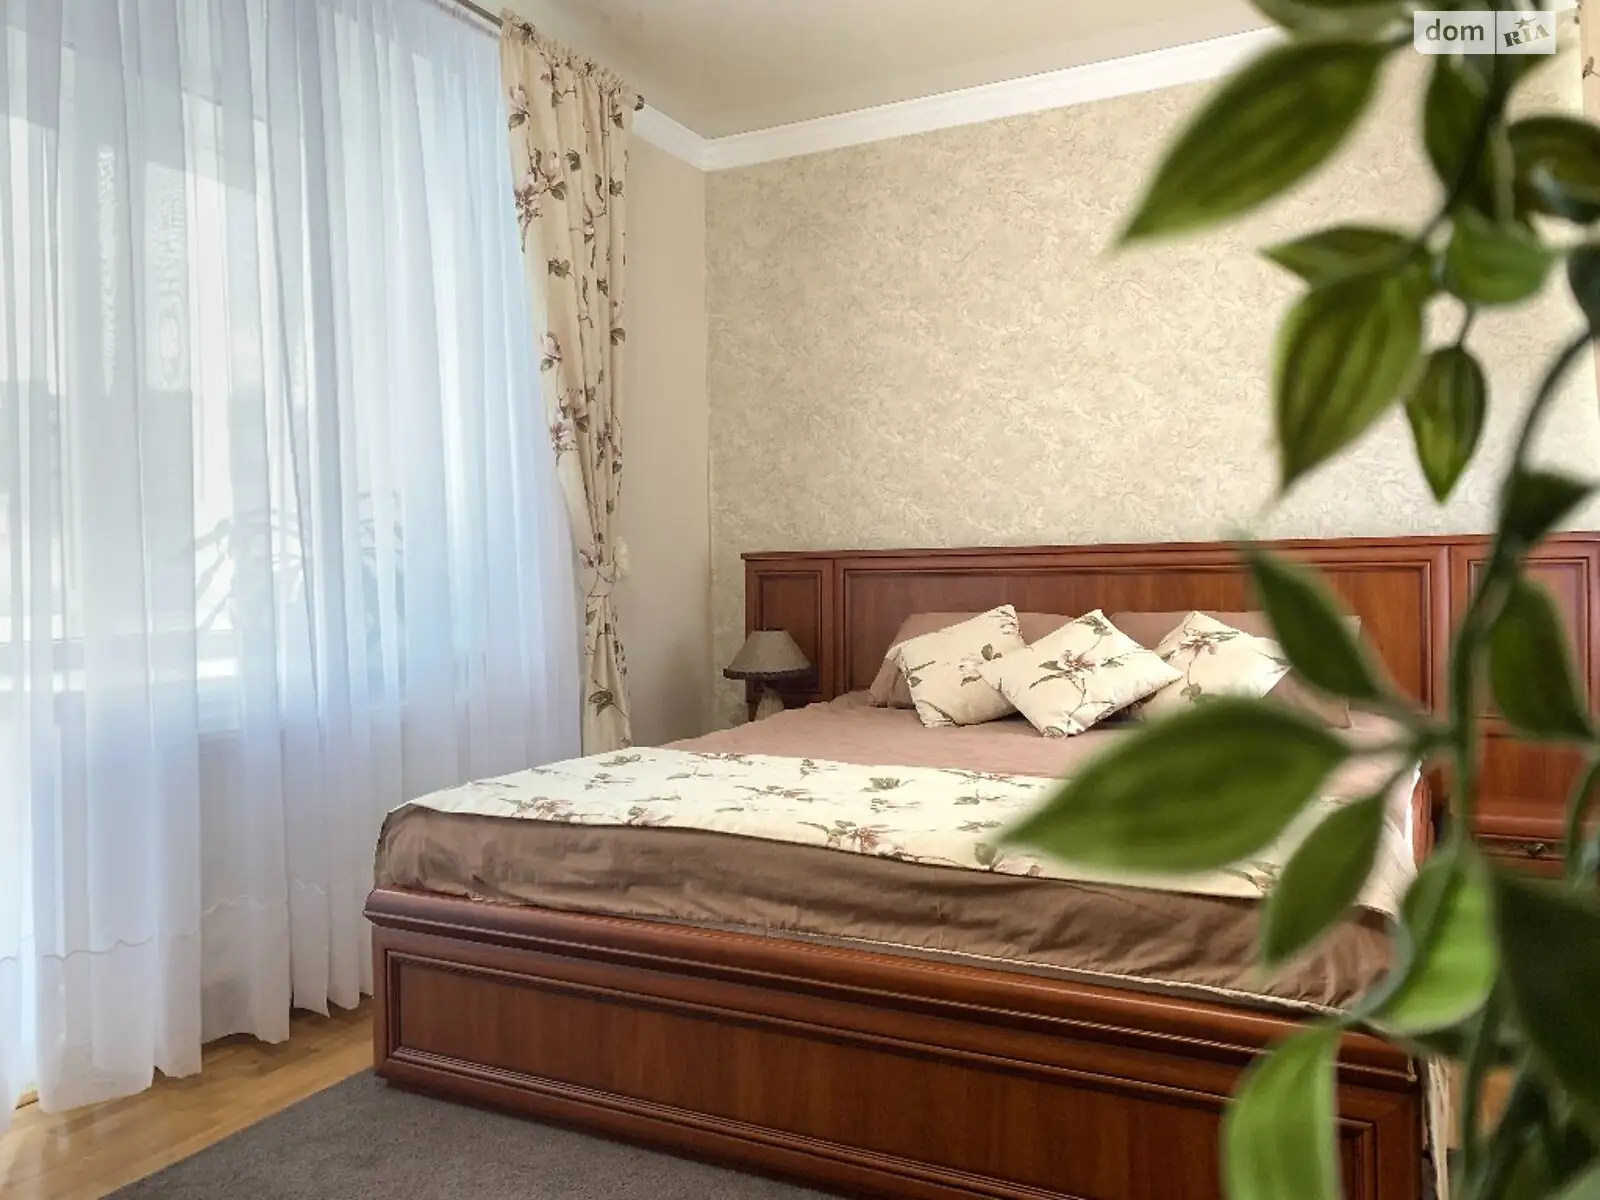 1-кімнатна квартира у Тернополі, цена: 956 грн - фото 1